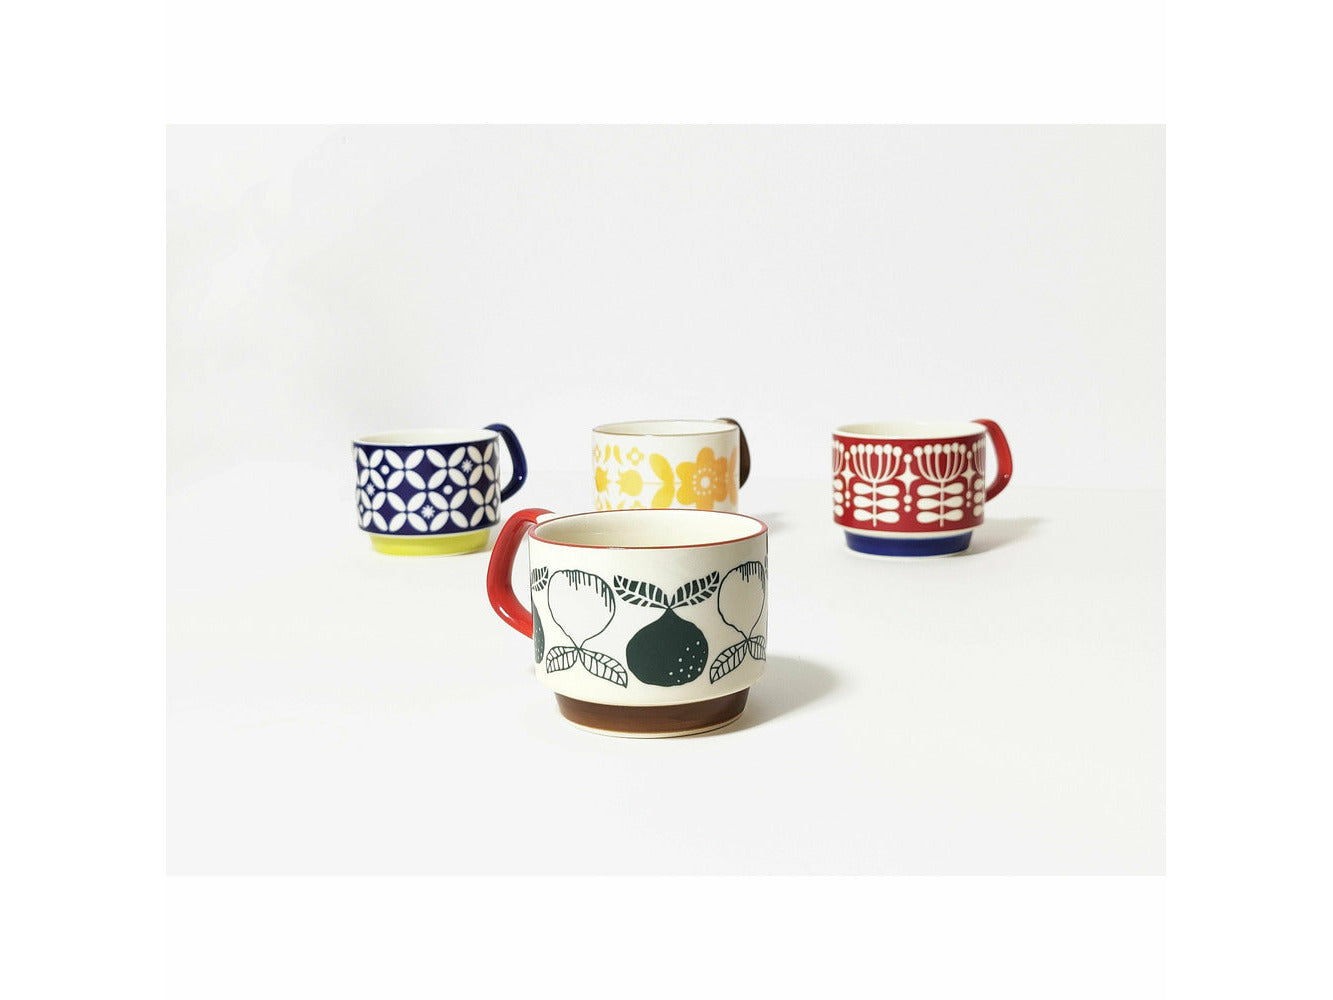 coffee mug, mugs, coffee cups, spainish coffee mugs, Mediterranean style mugs, alborada, gift for coffee lover, Housewarming gift, new home must, happy stuff